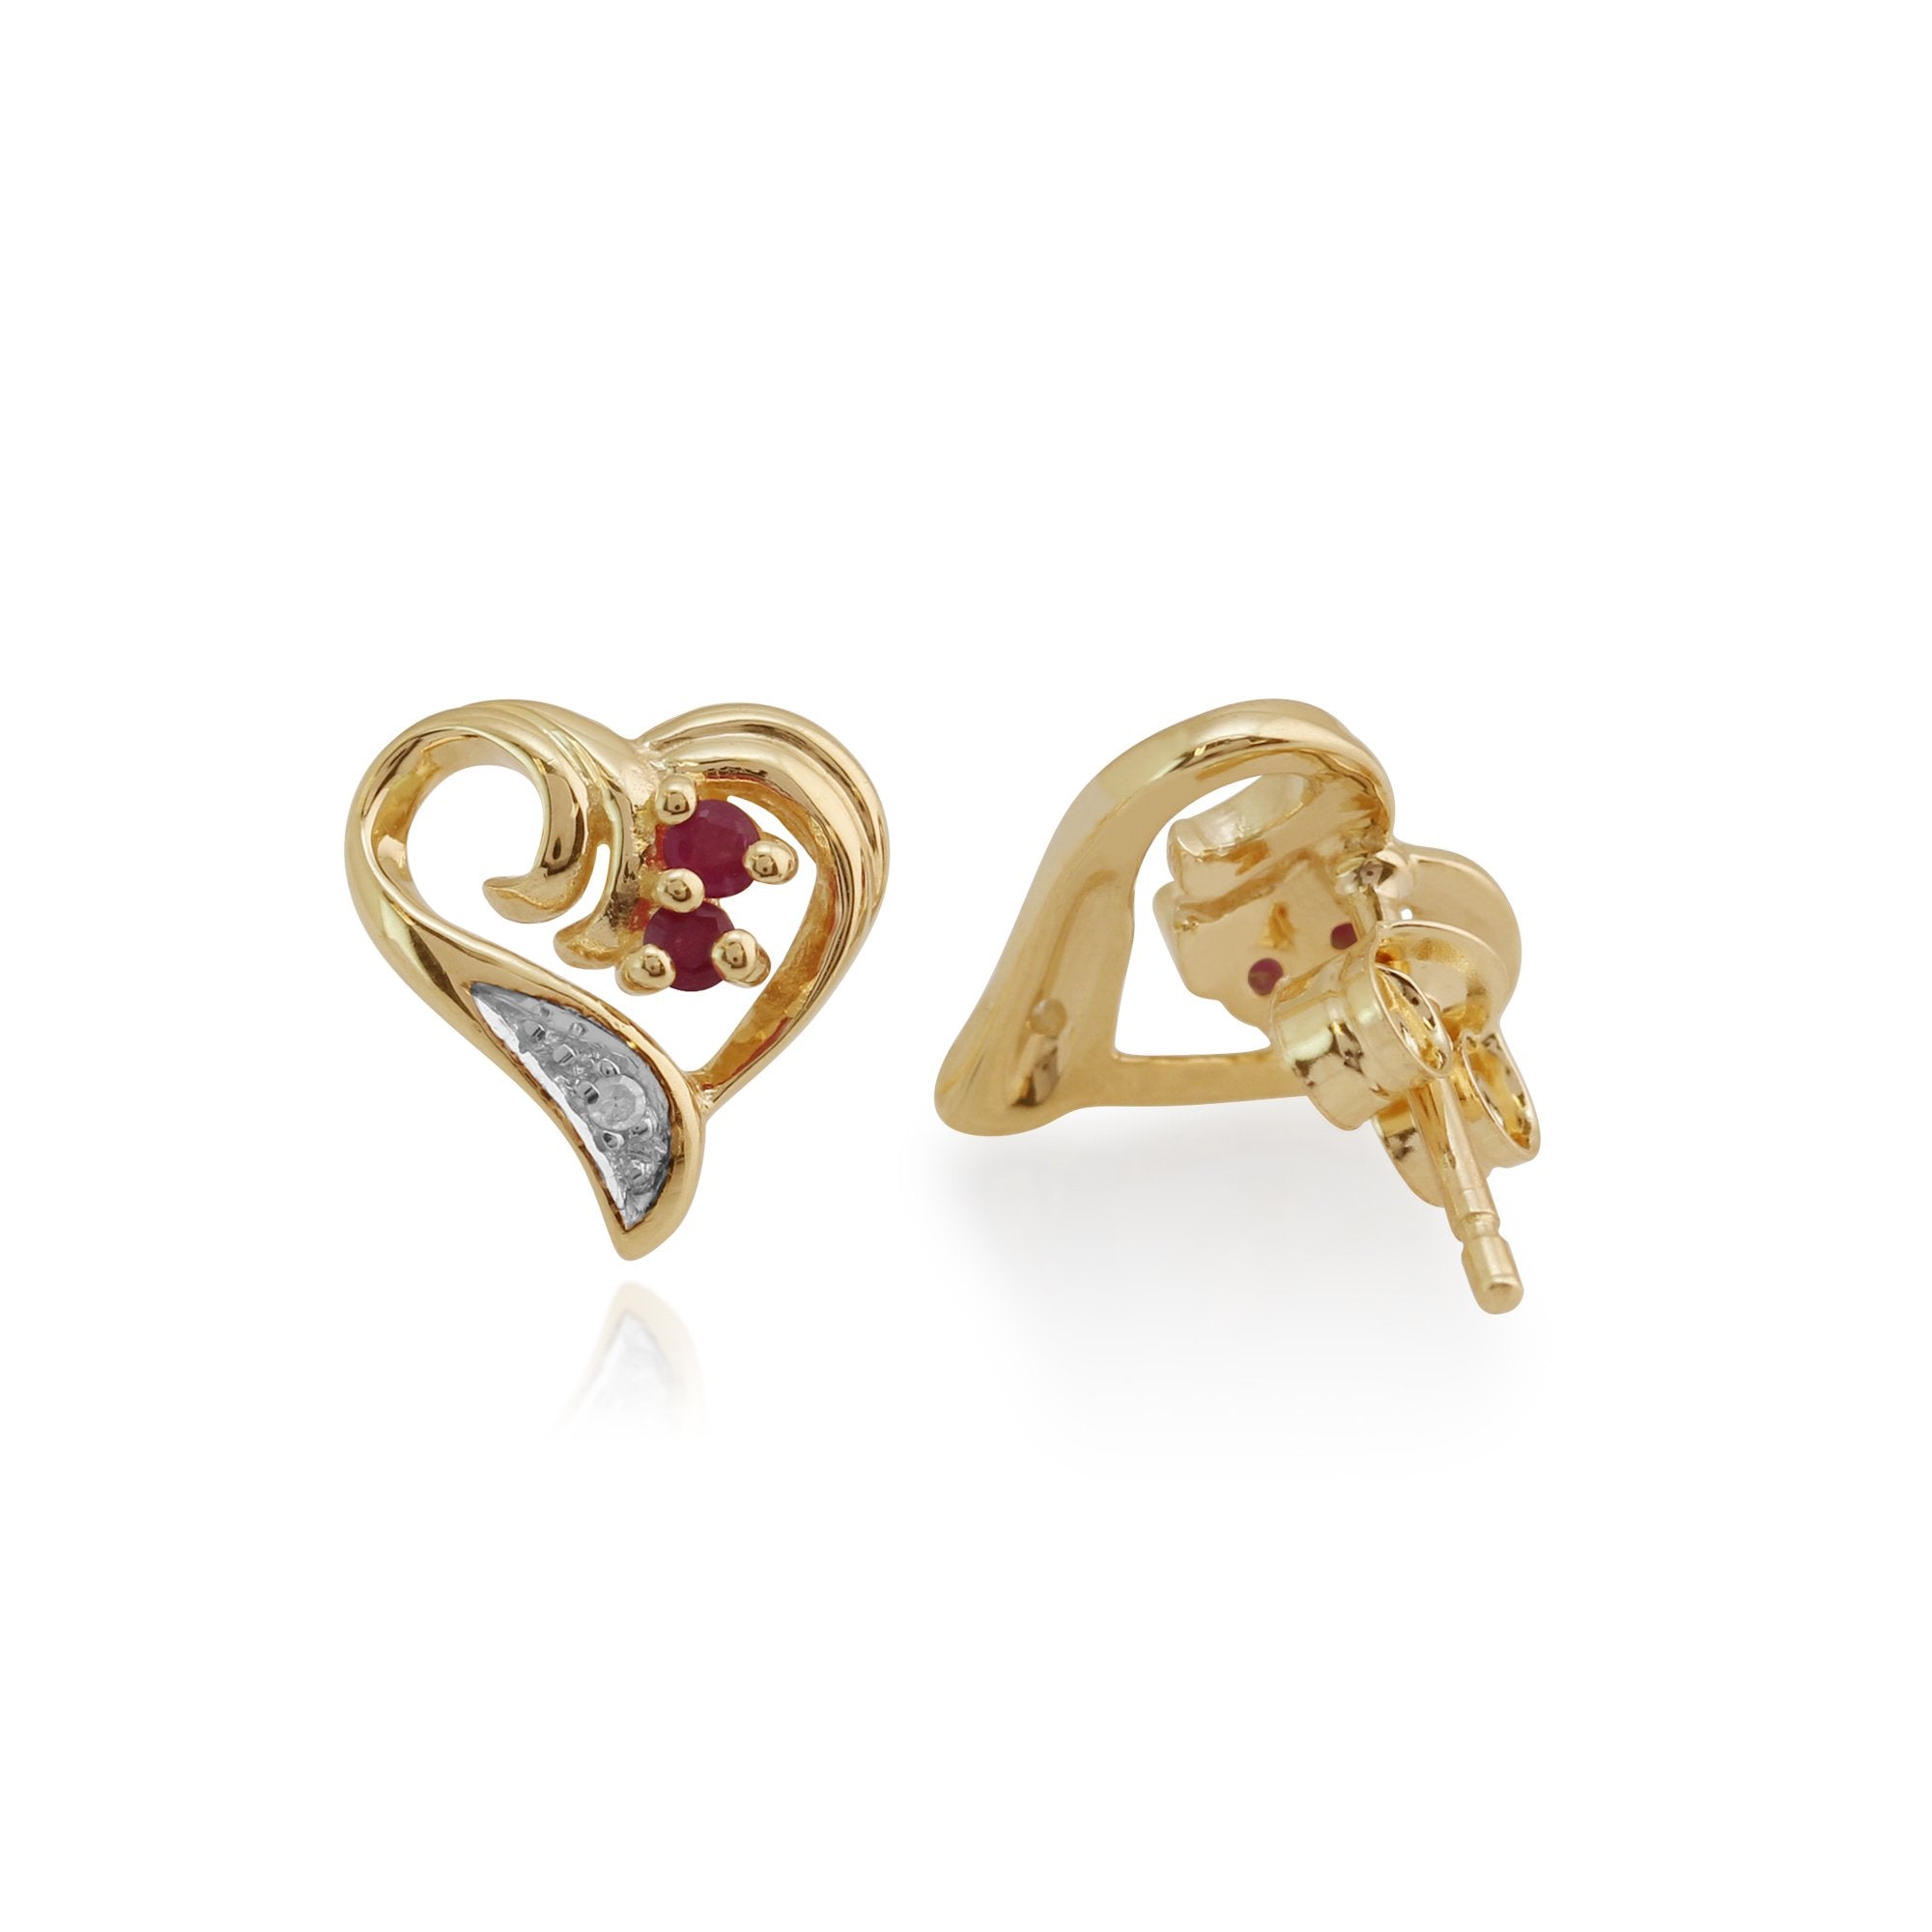 Classic Round Ruby & Diamond Swirled Love Heart Stud Earrings in 9ct Yellow Gold